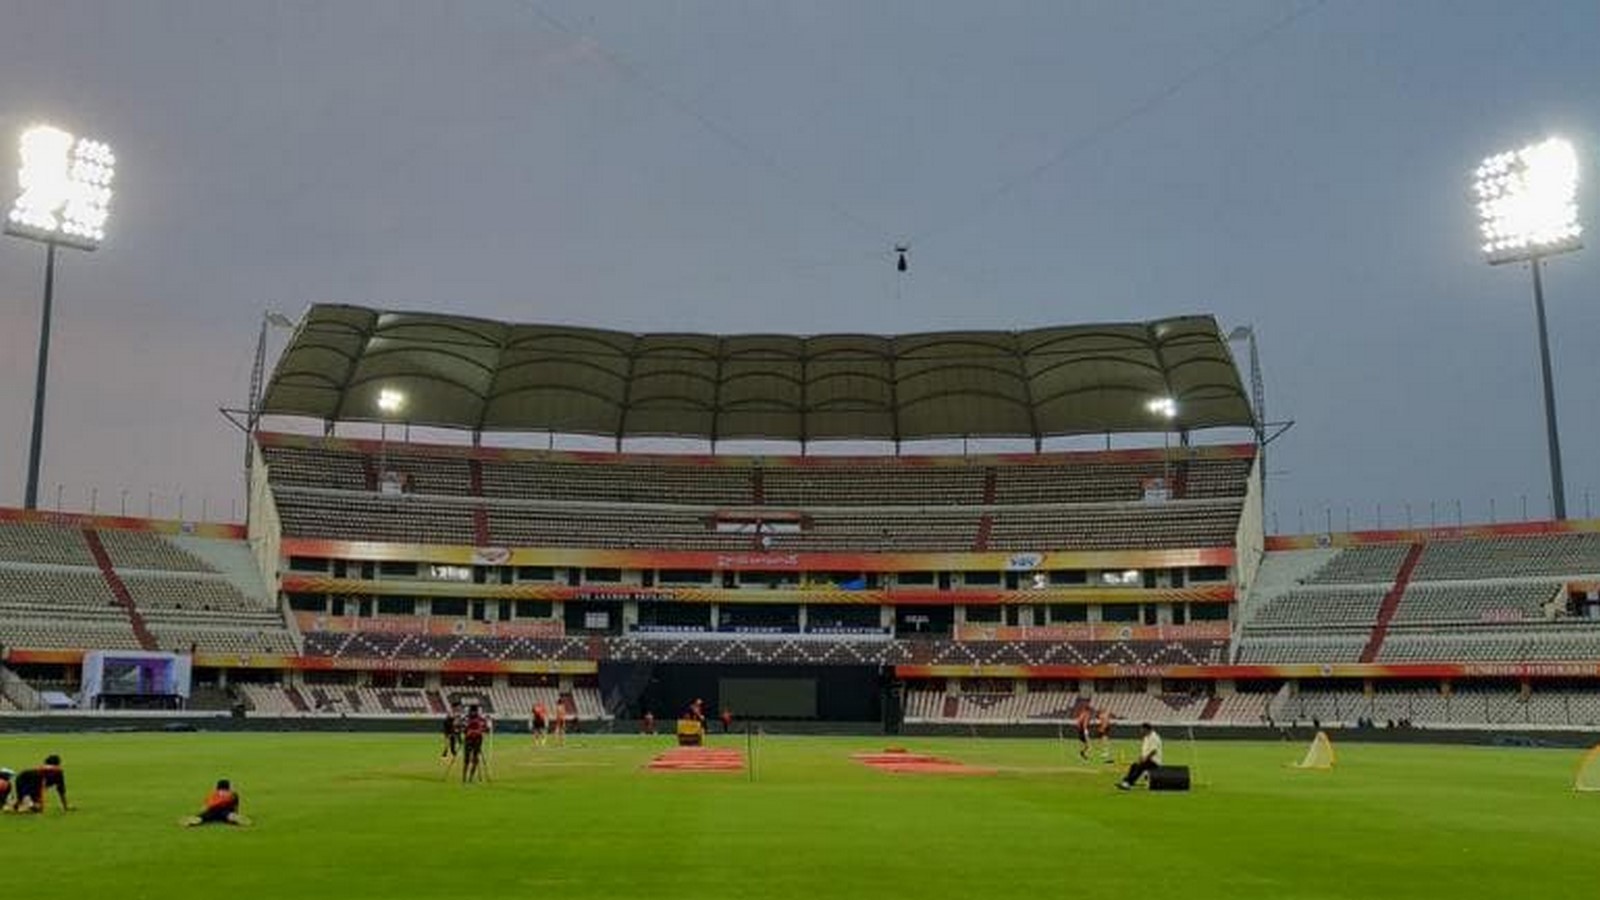 Rajiv Gandhi International Cricket Stadium by Shashi Prabhu: One of India’s most popular cricket stadiums - Sheet4